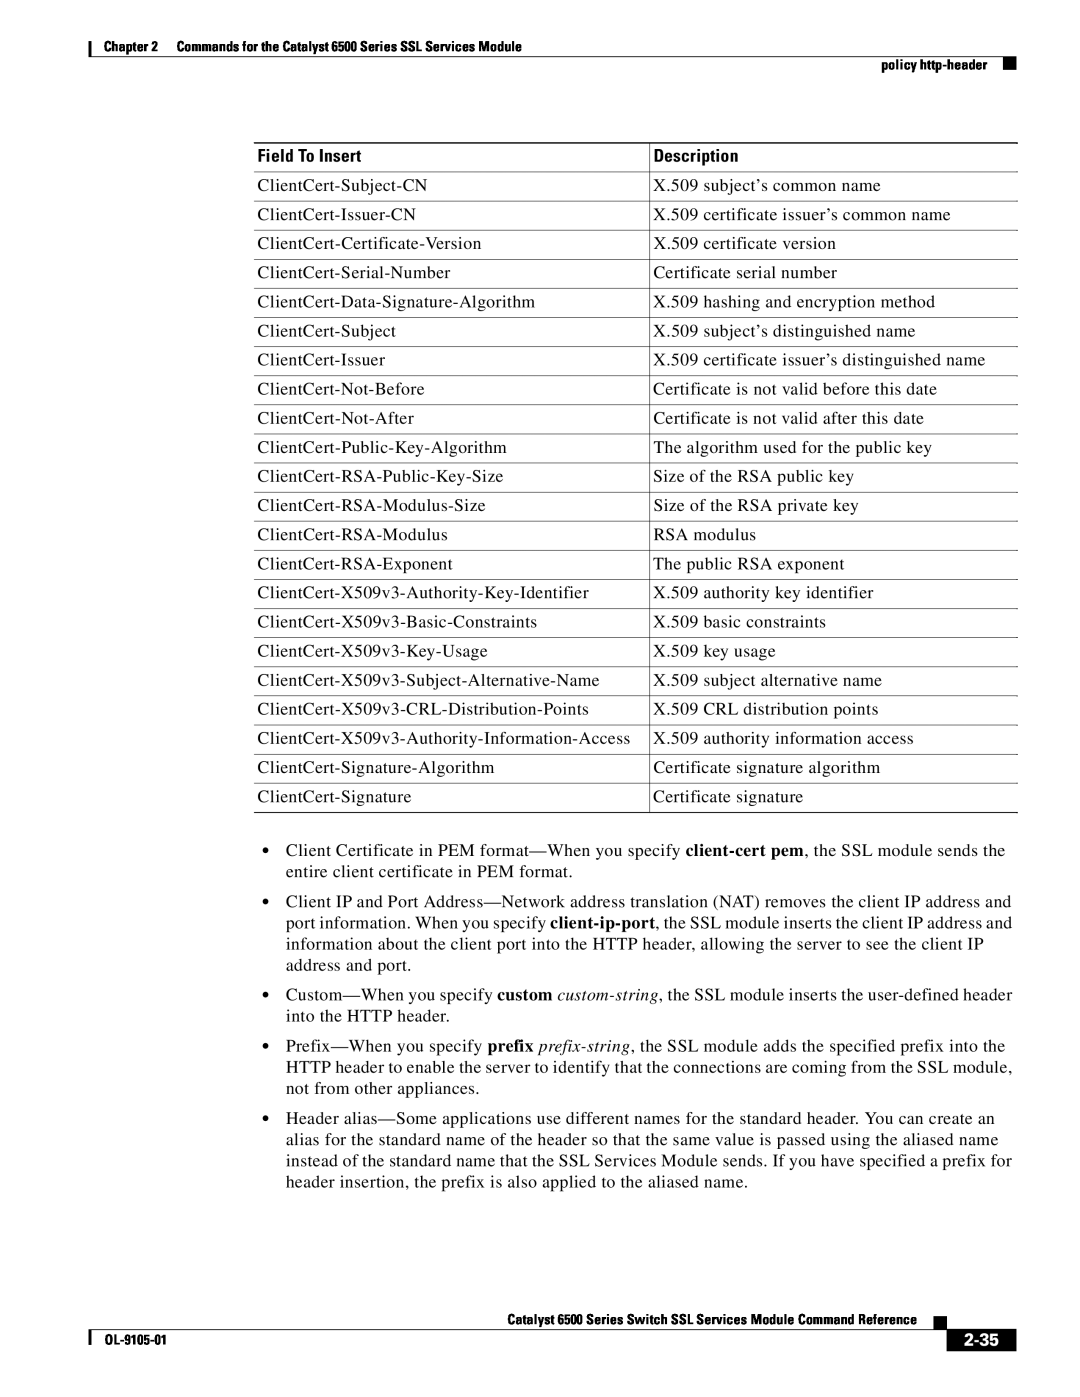 Cisco Systems 6500 manual 2-35, Field To Insert, Description, ClientCert-Subject-CN 